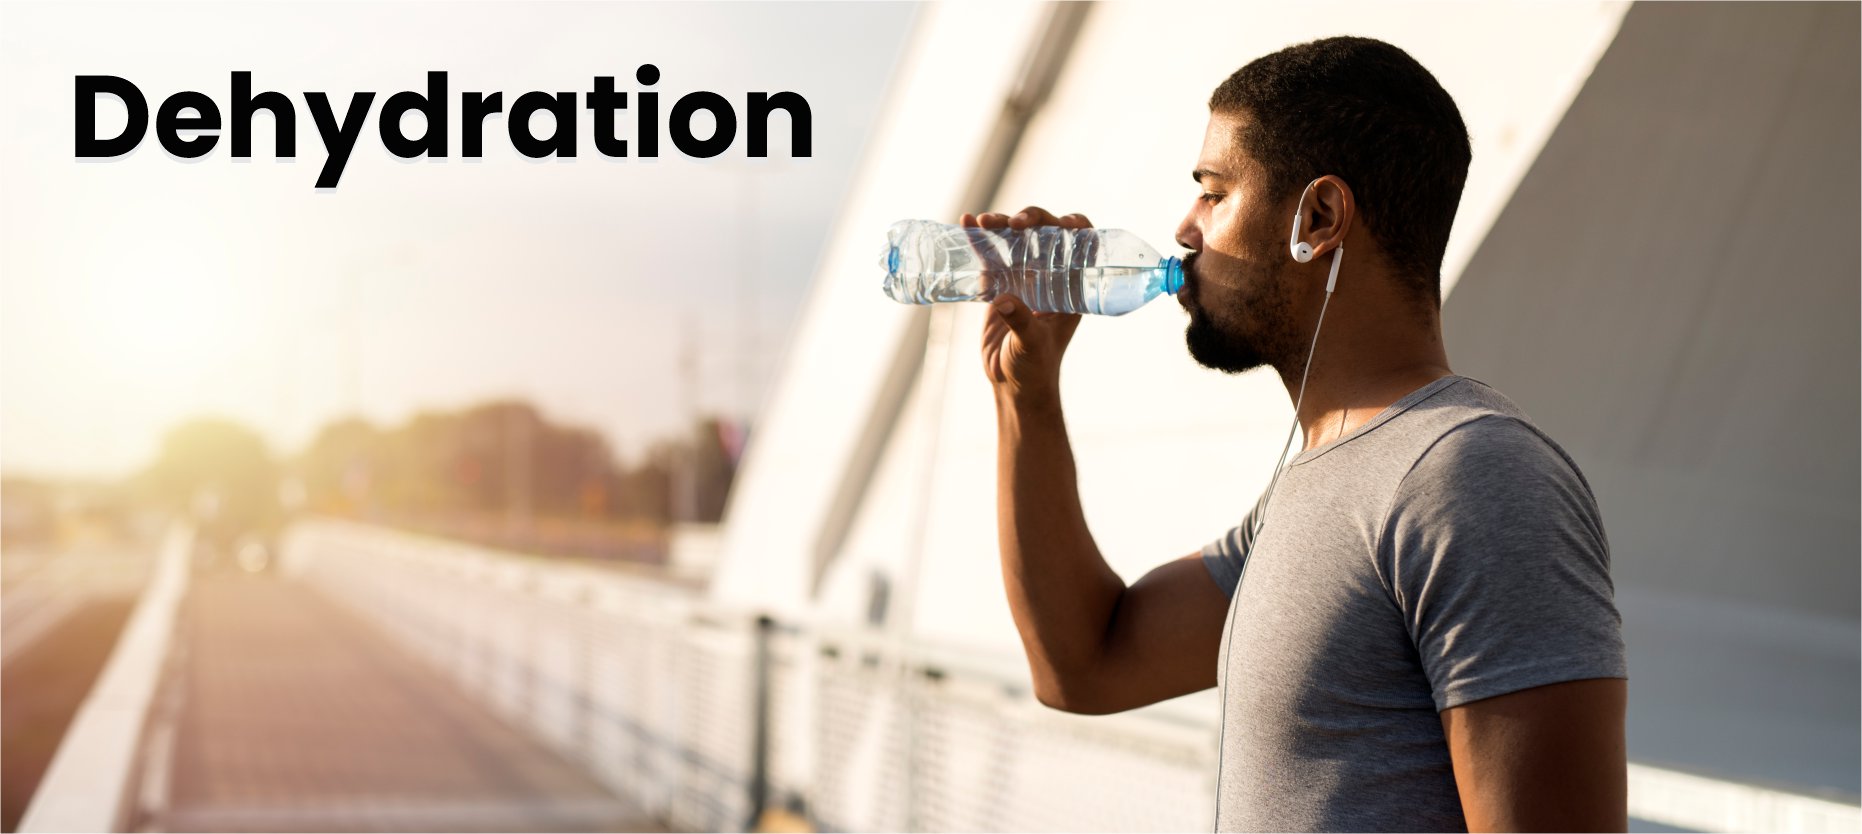 Dehydration: A Major Threat